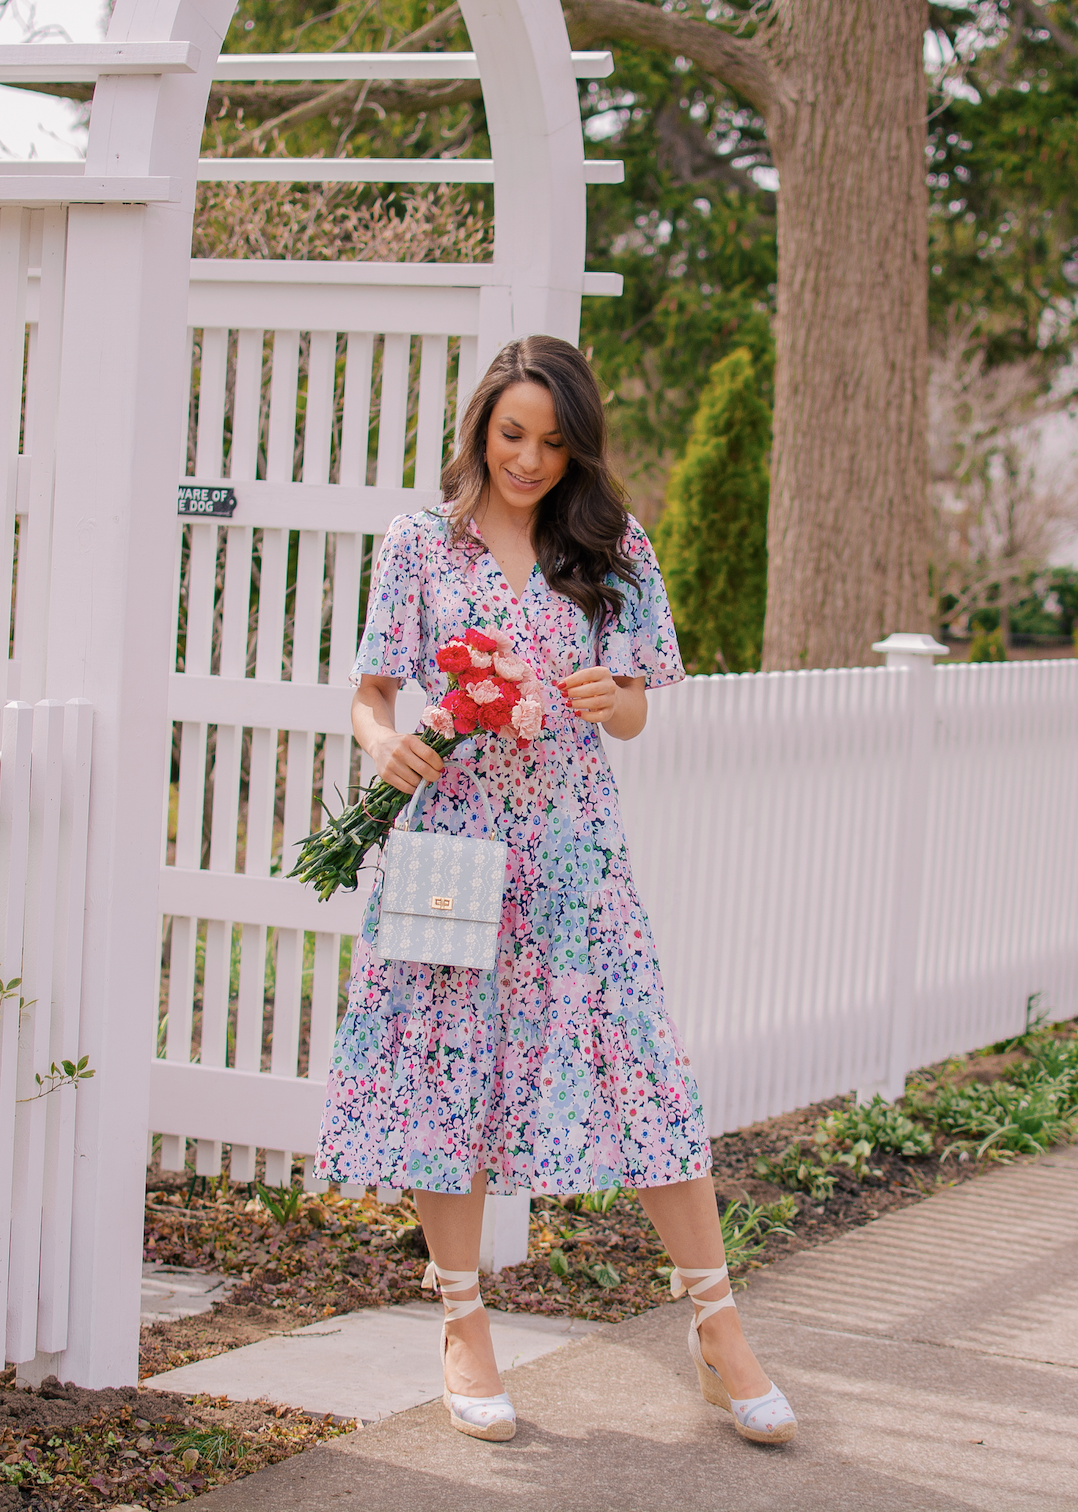 Floral Details For Spring | The Pink Brunette | Neely & Chloe | Kate Spade Dress | Margaux NY 